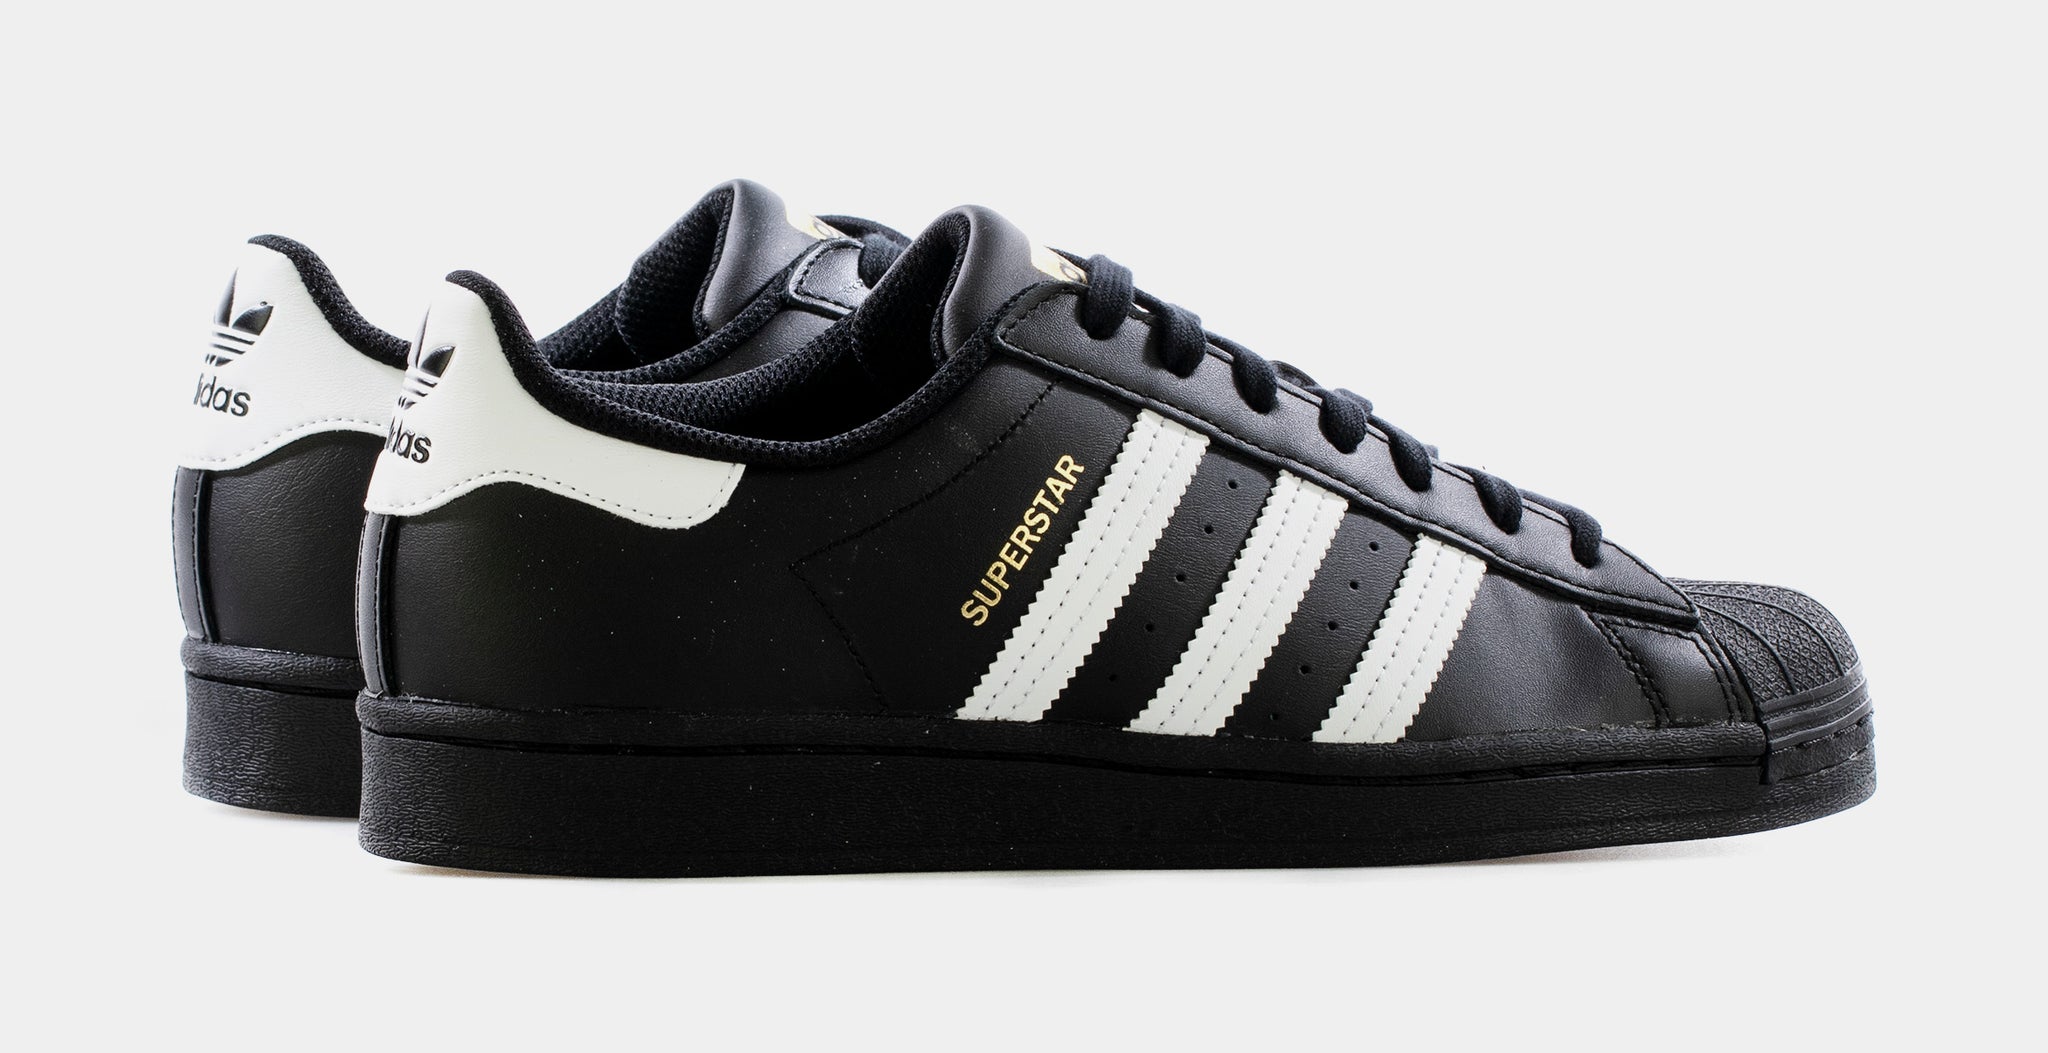 Adidas Superstar Shoes - Black/White - 11